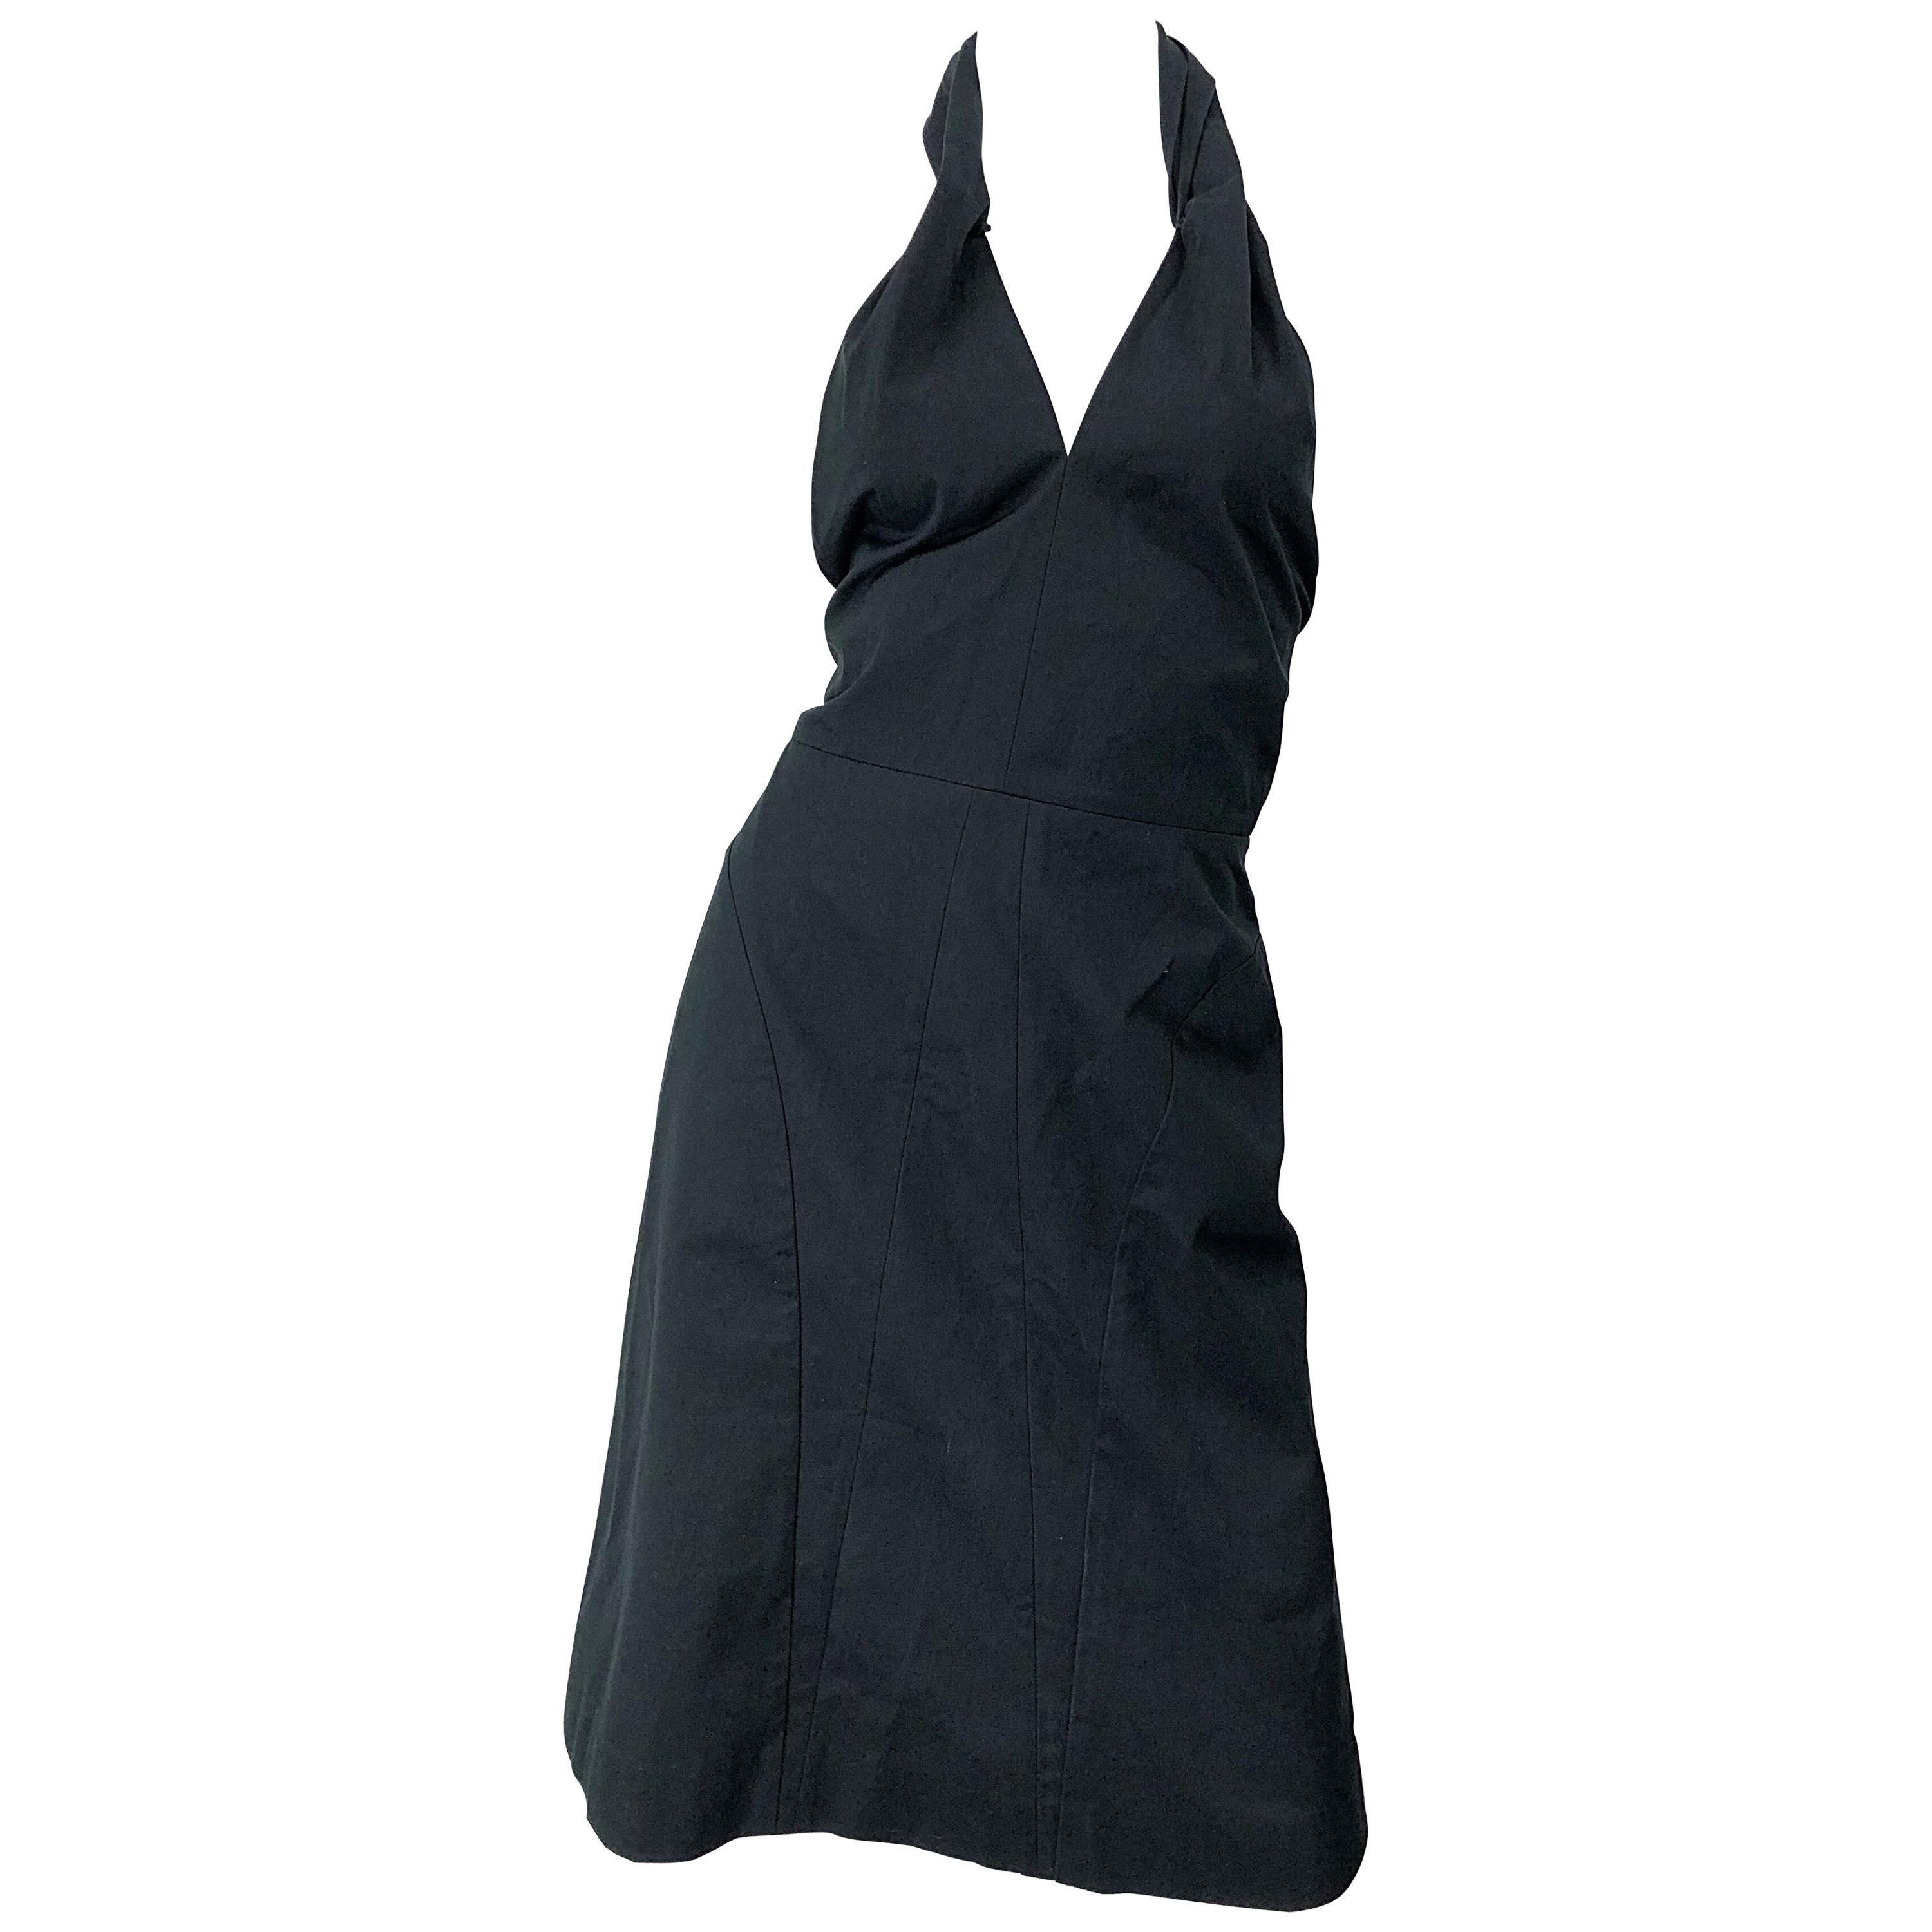 Yves Saint Laurent SS 2010 Runway Black Cotton Size 38 Plunging YSL Halter Dress